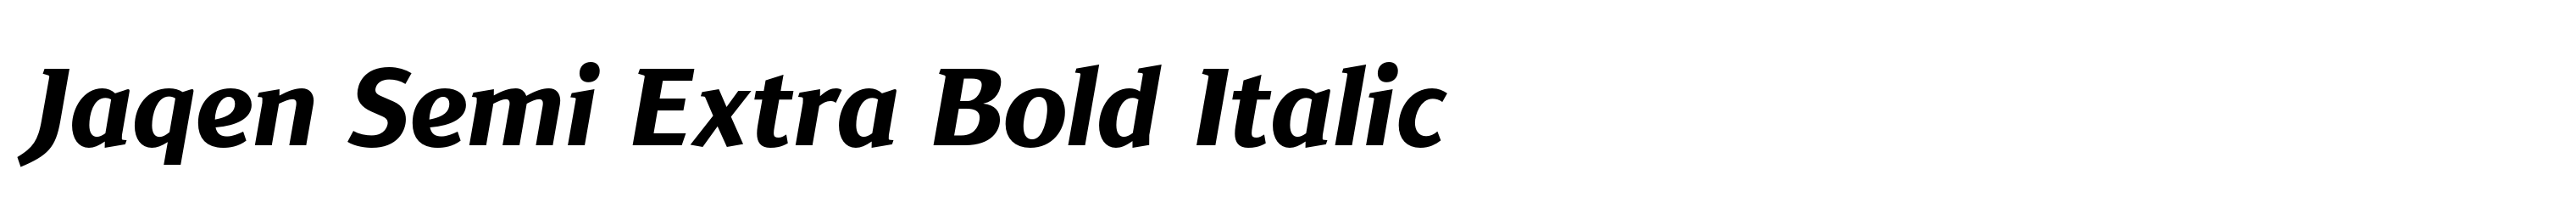 Jaqen Semi Extra Bold Italic